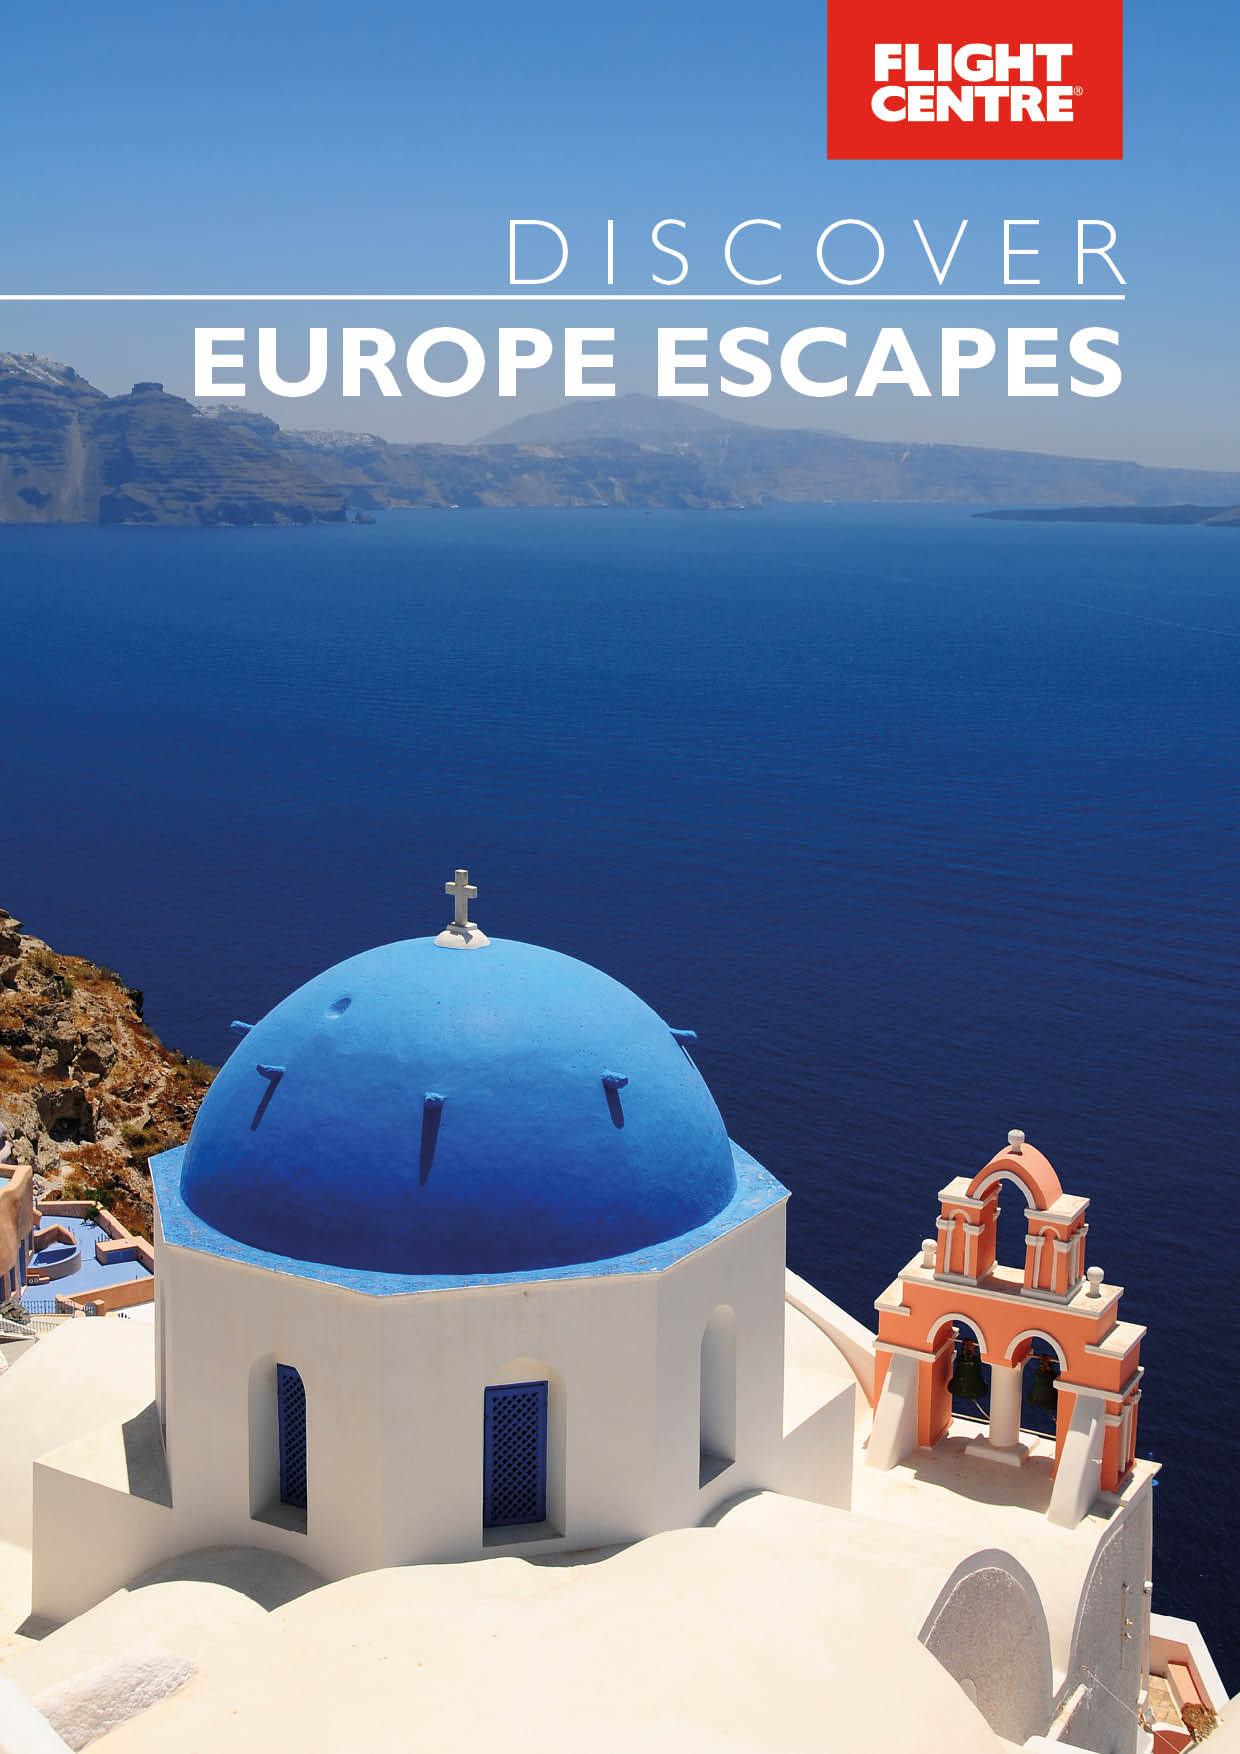 Europe Escapes brochure